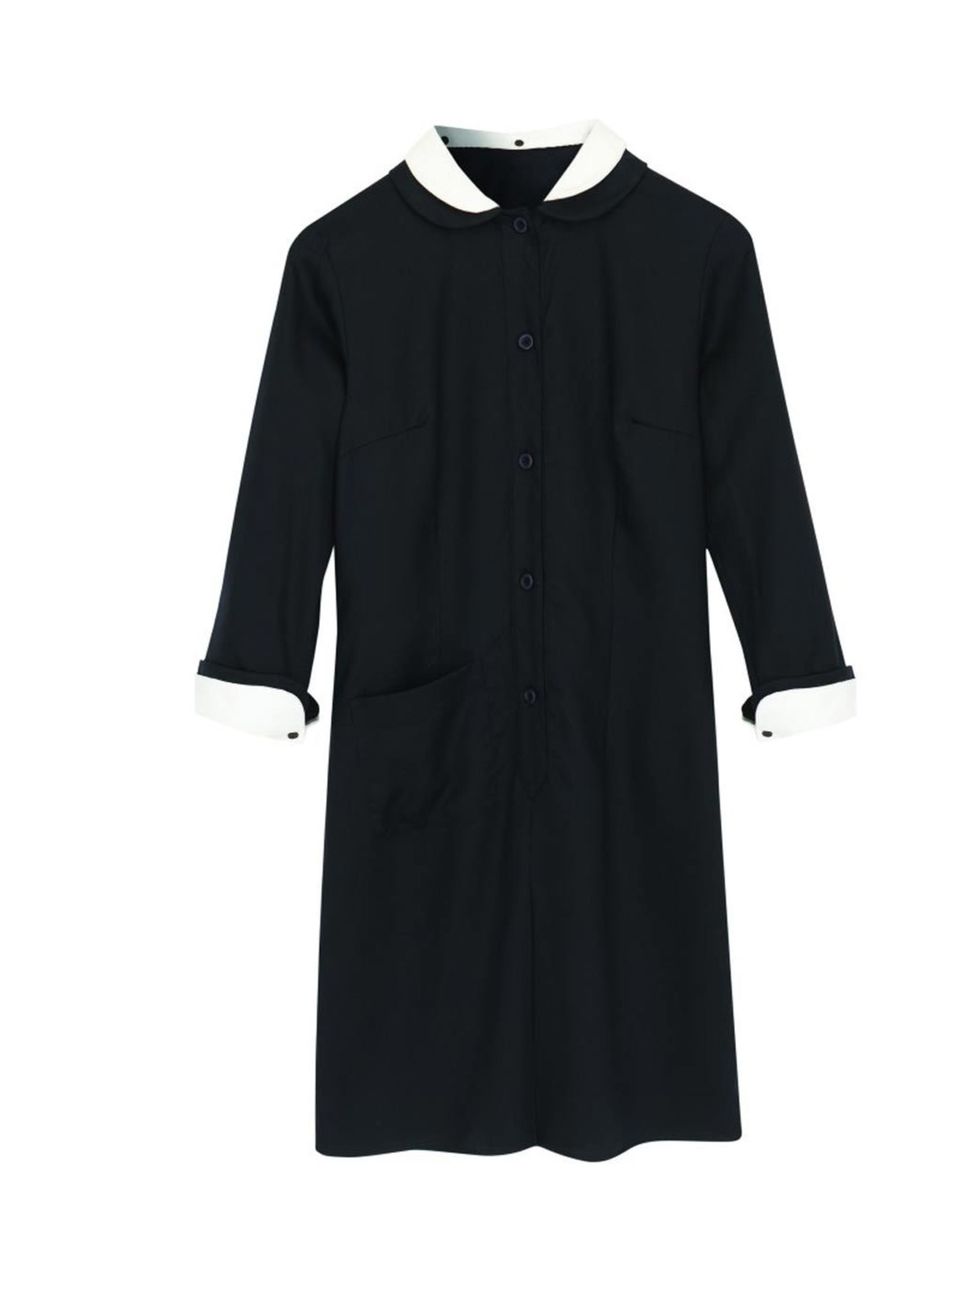 <p>J W Anderson X Topshop - Long Black Shirt - £79.99</p>